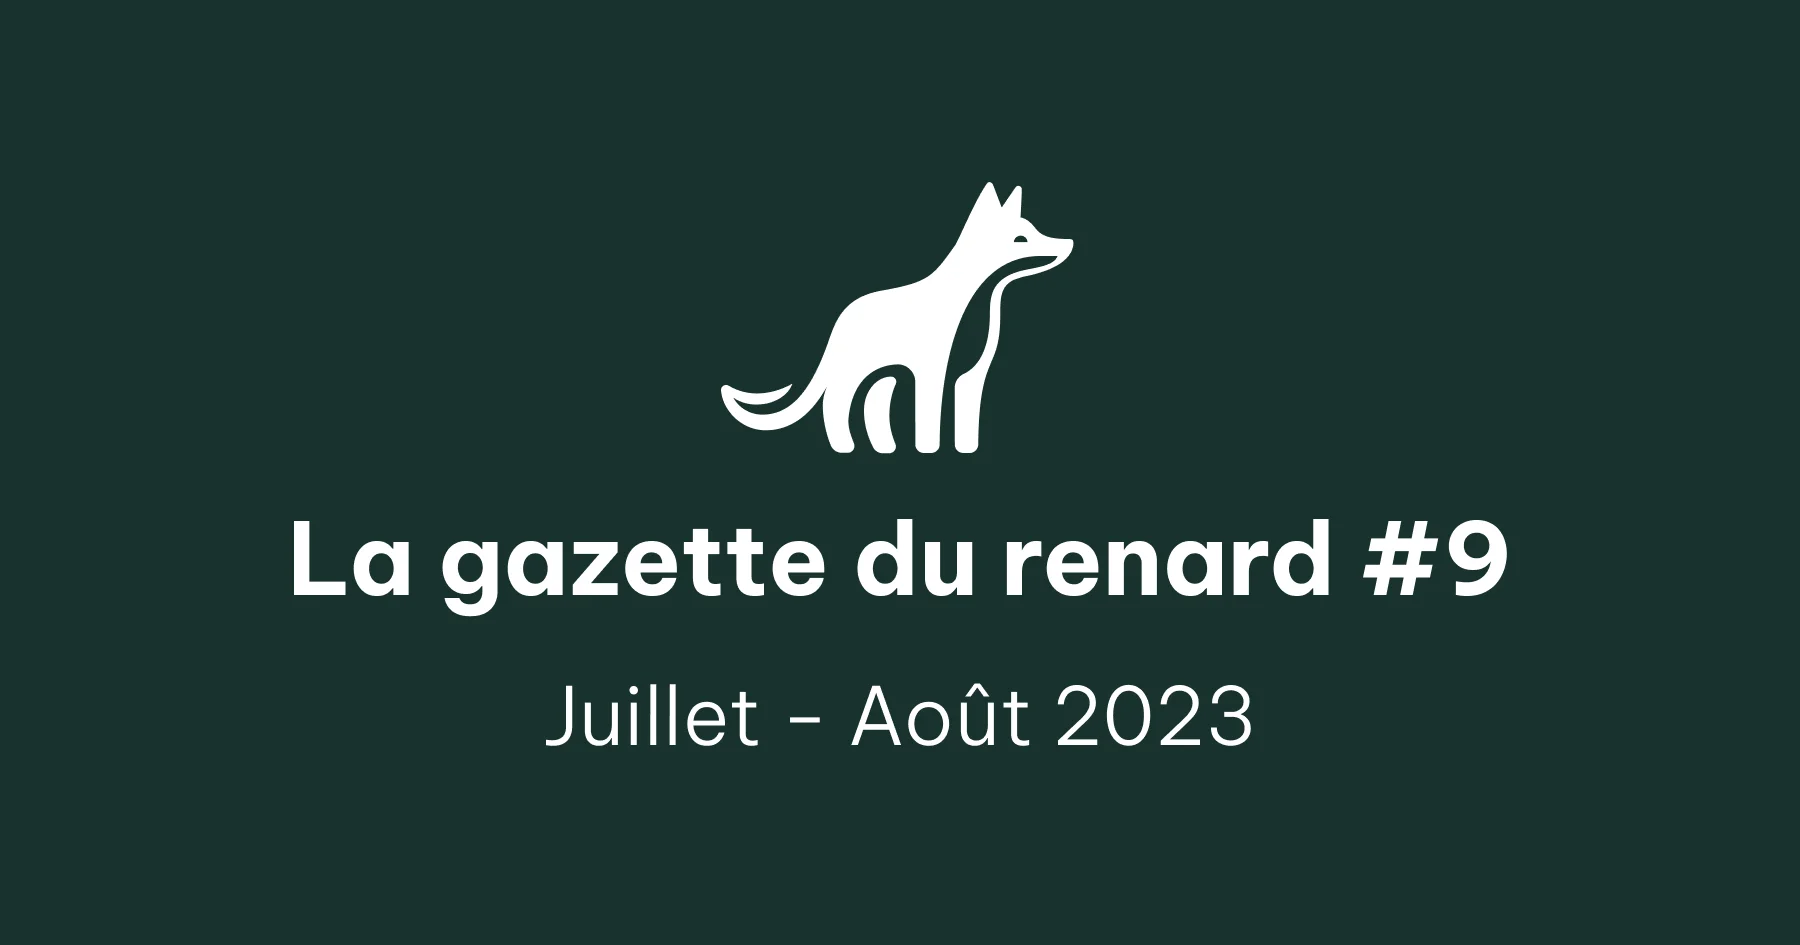 La Gazette du renard #9 - Juillet et Août 2023